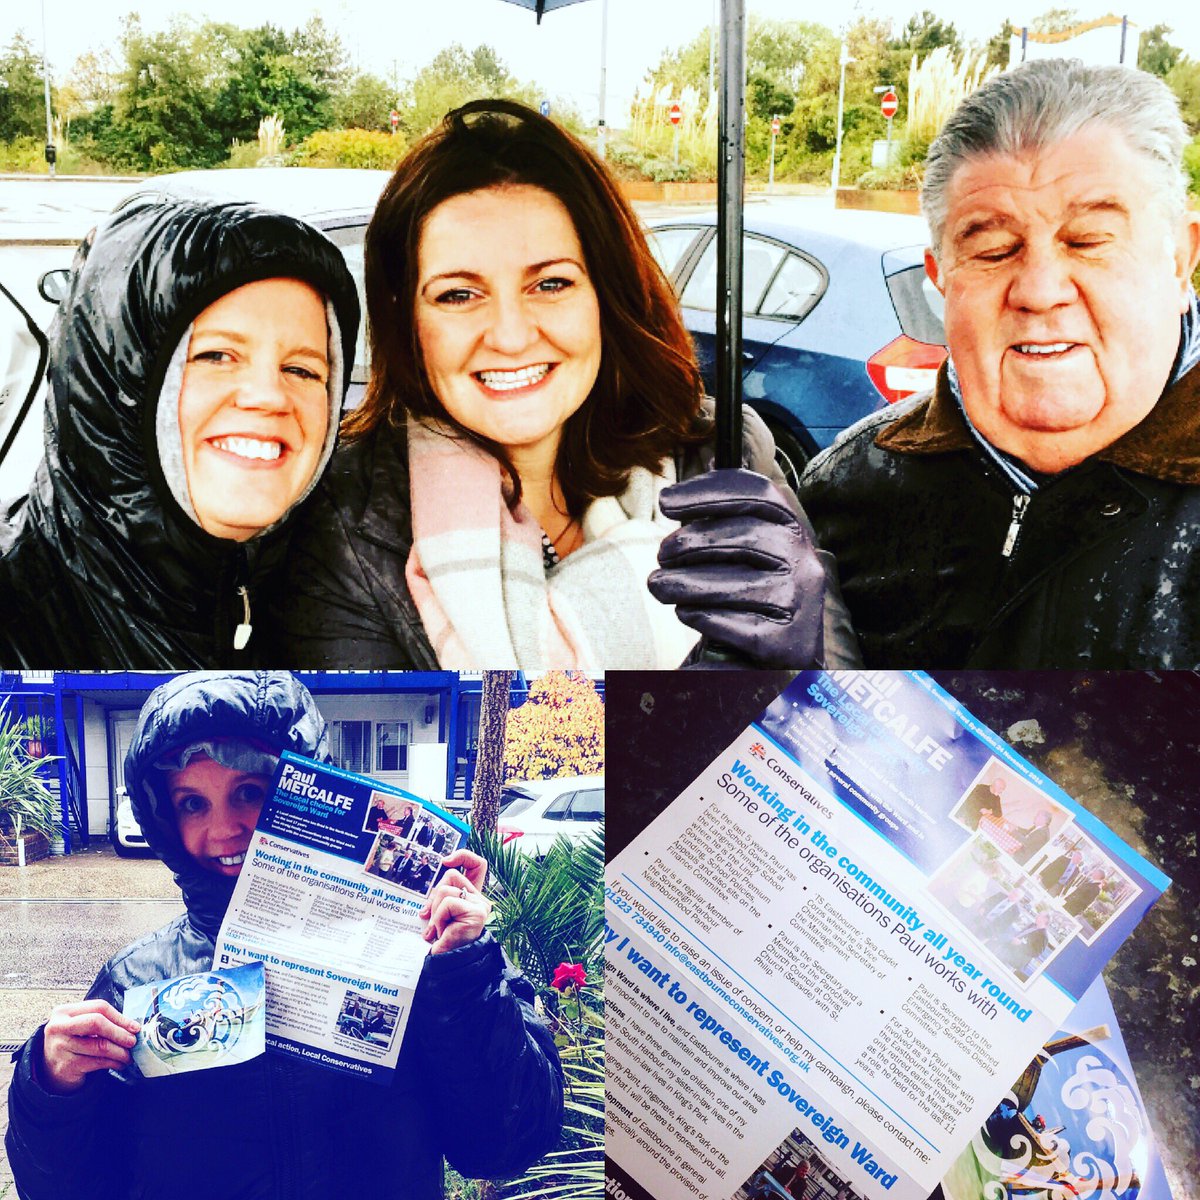 @Caroline_Ansell @CllrGordonJ @CllrDaveE @Ebourne_co_uk 
#sovereignward #votepaulmetcalfe #Conservative #Eastbourne #Election2016 #weather